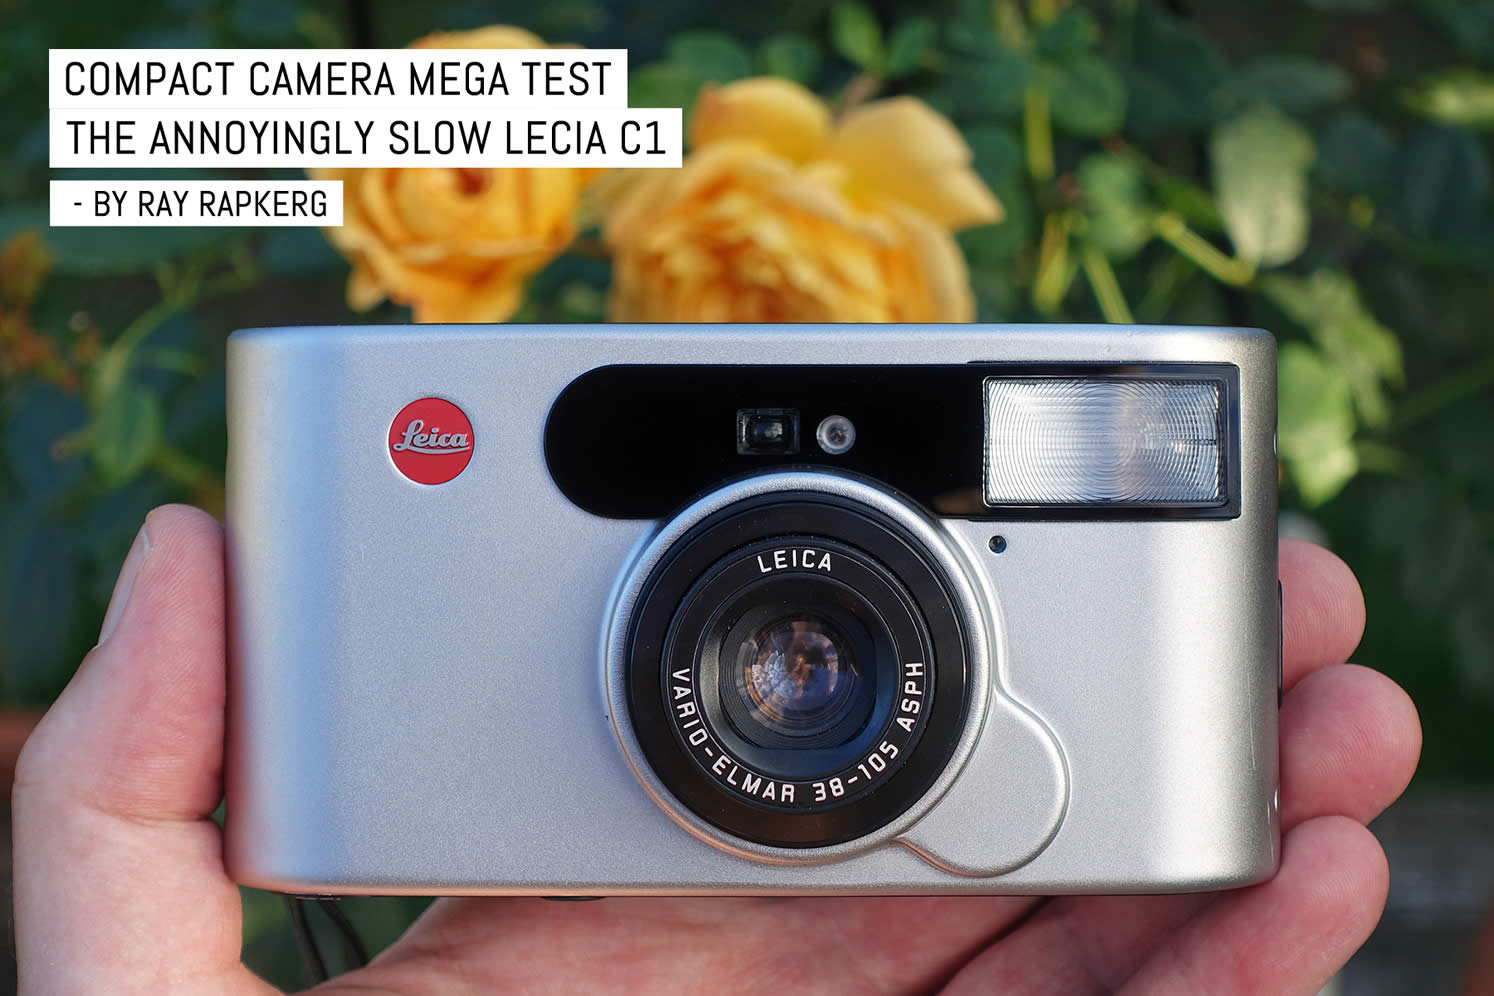 Compact camera mega test: The annoyingly slow Leica C1